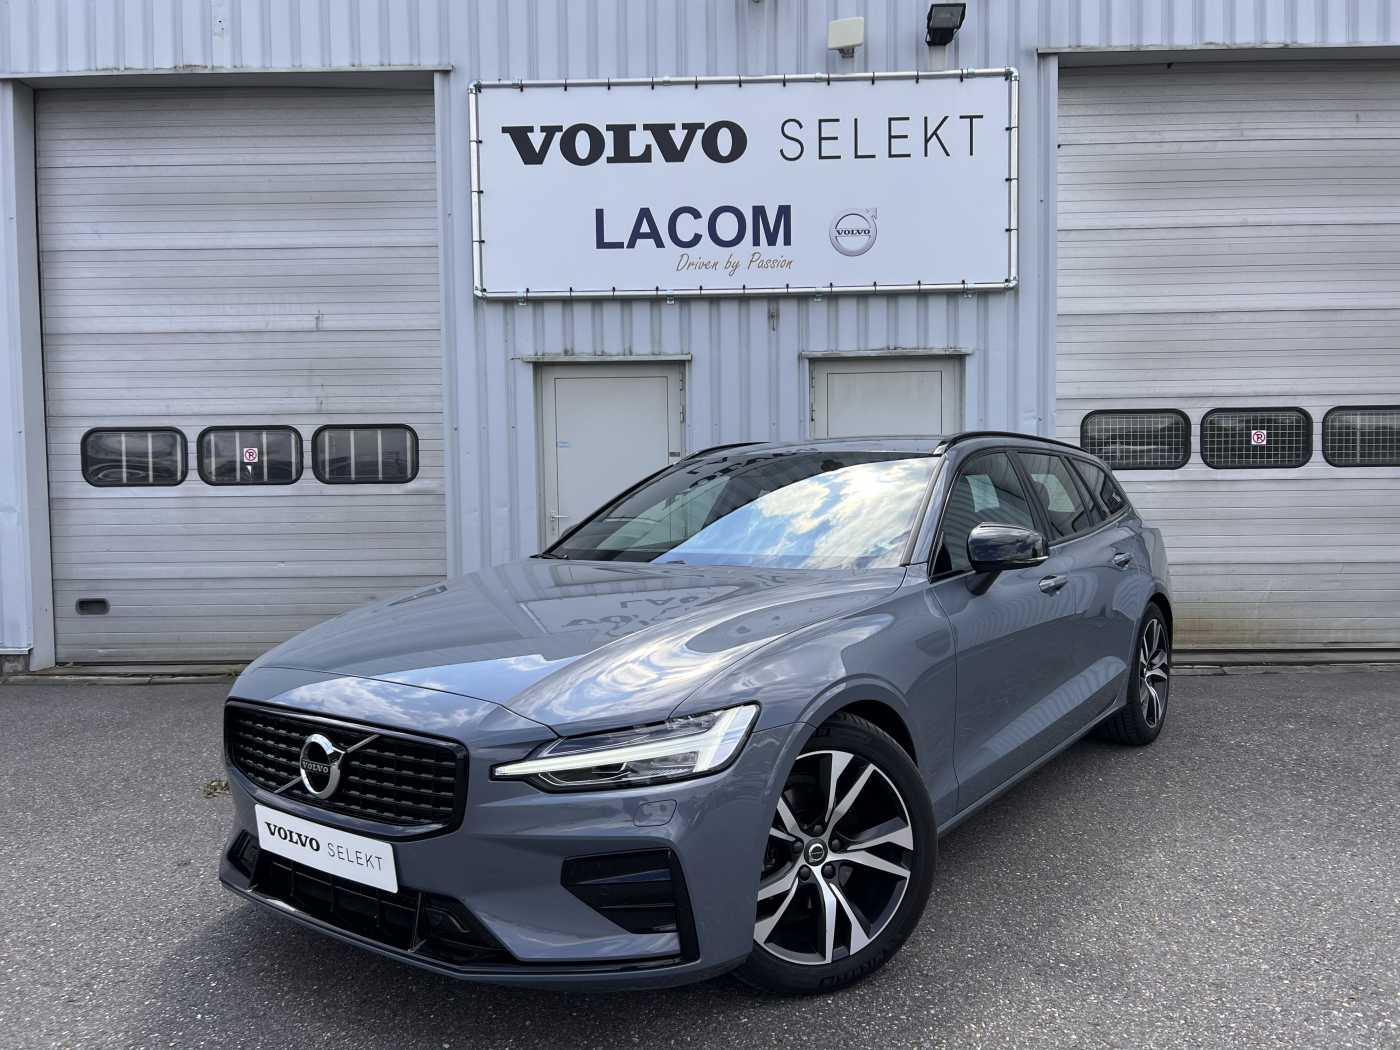 XC90 - Volvo Lacom